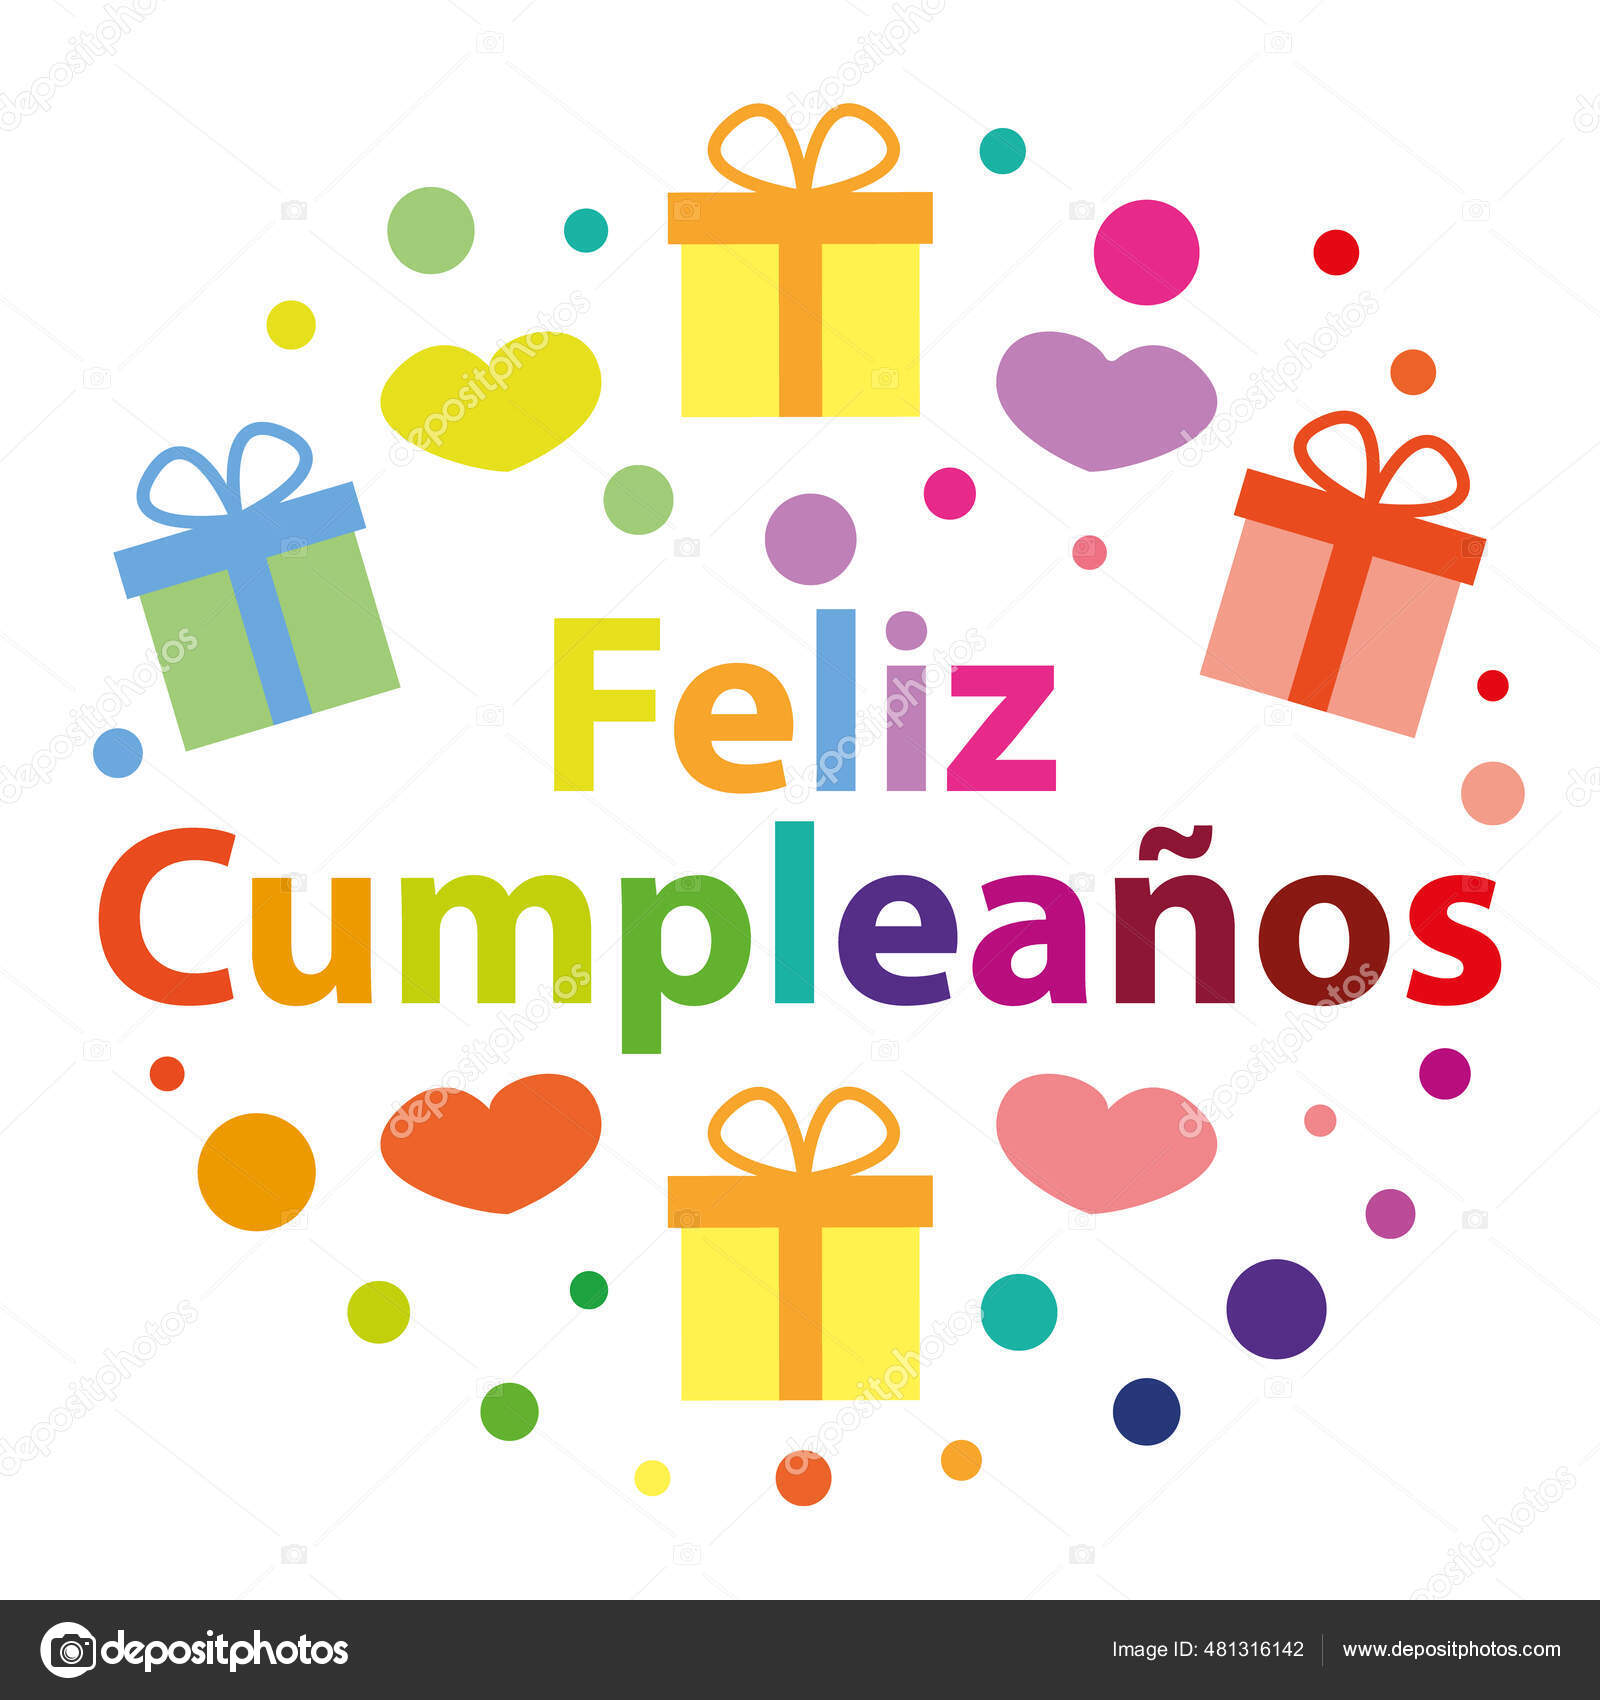 https://st2.depositphotos.com/1012407/48131/v/1600/depositphotos_481316142-stock-illustration-feliz-cumpleanos-vector-greeting-card.jpg